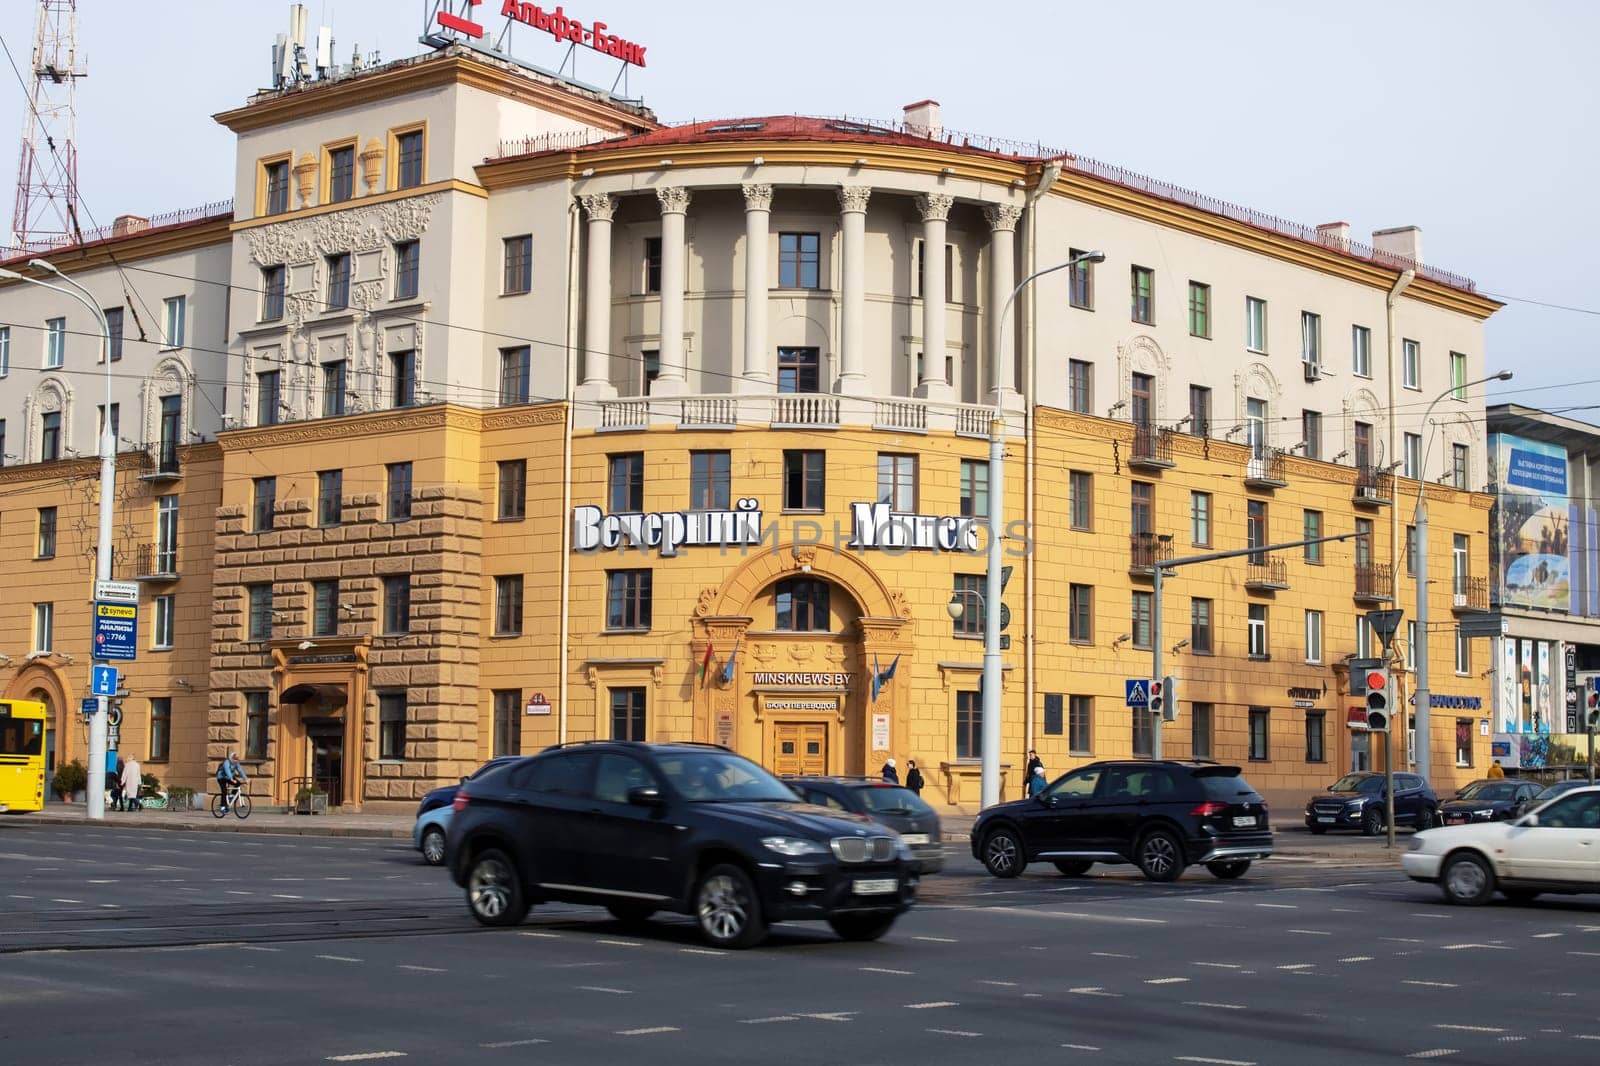 The building of the newspaper Vecherniy Minsk by Vera1703